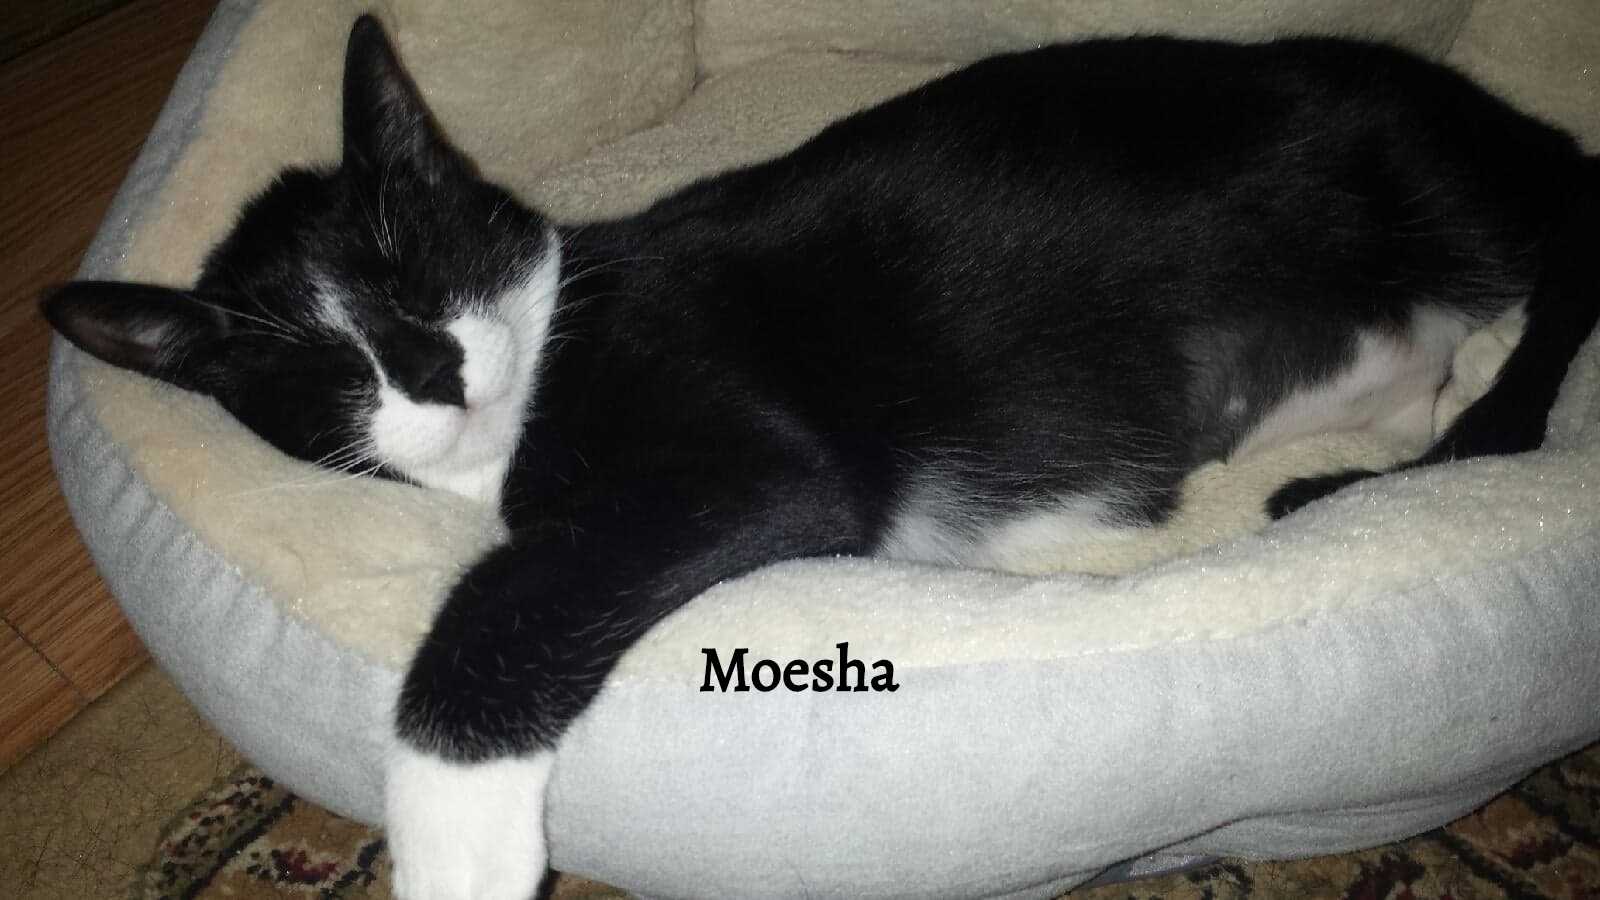 Moesha detail page